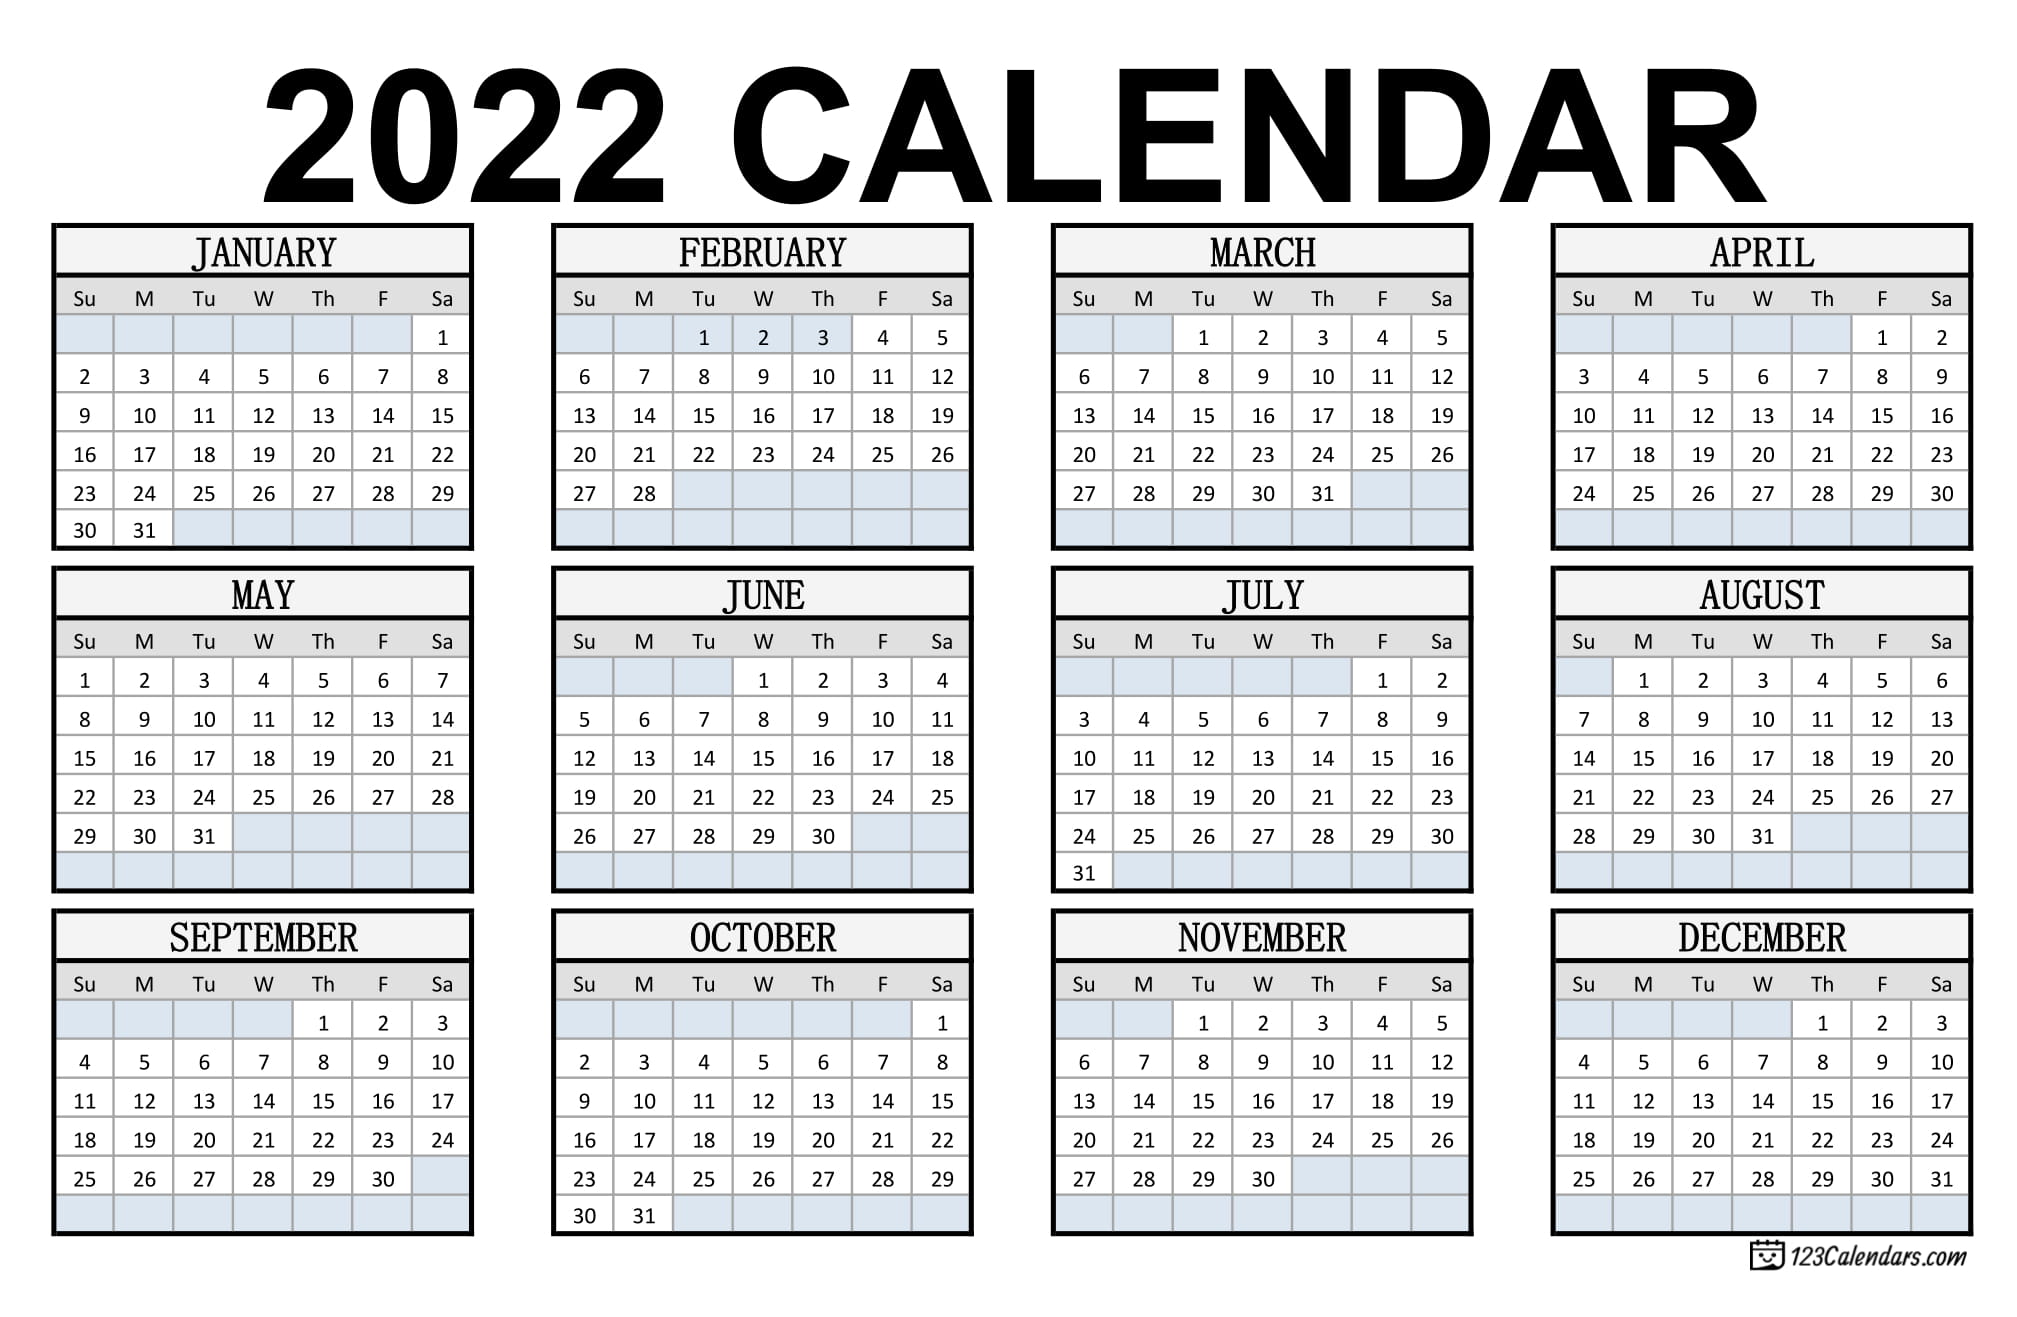 Printable Calendar 2022 Year Year 2022 Calendar Templates | 123Calendars.com